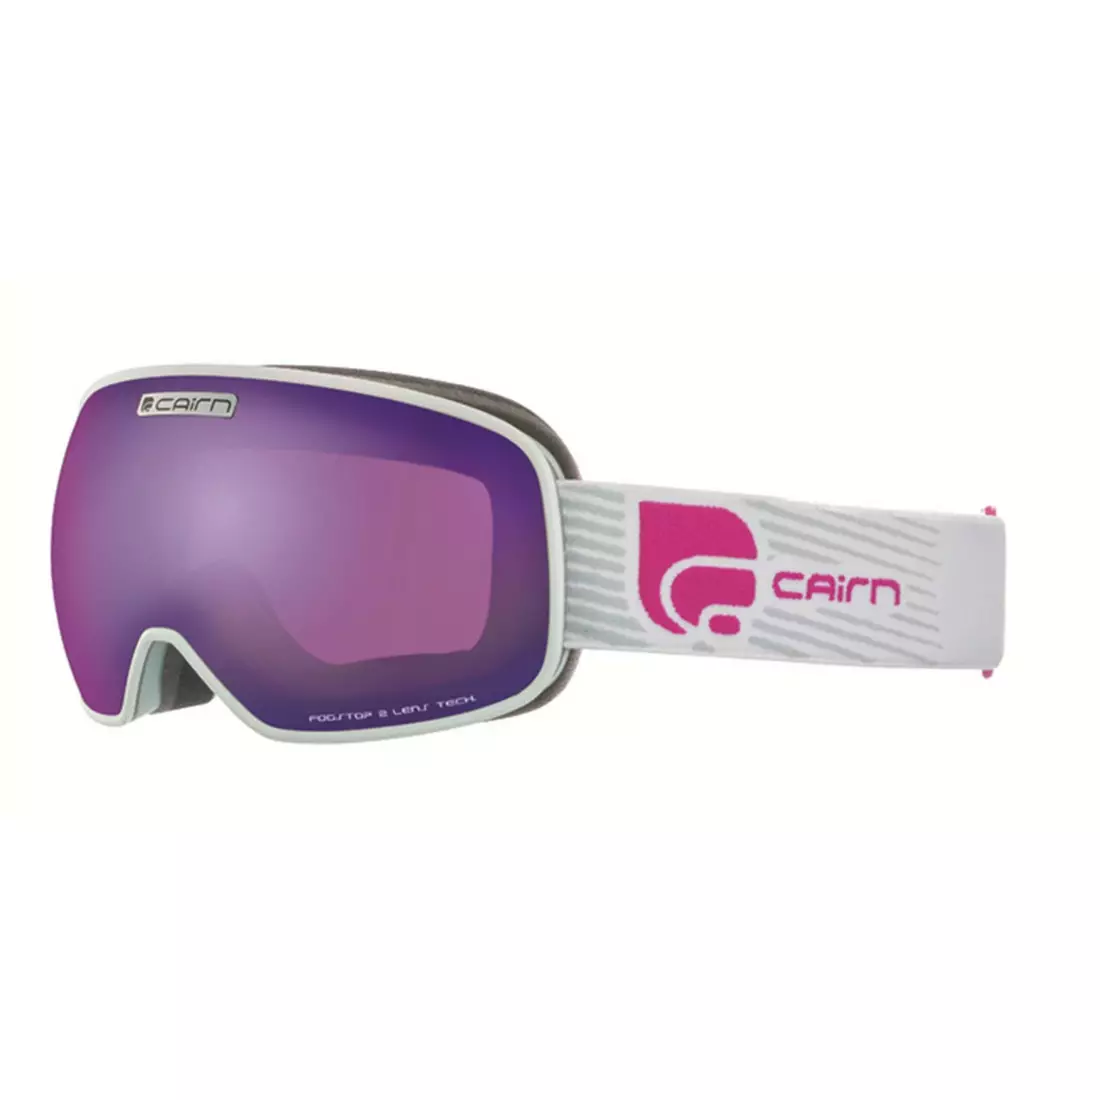 CAIRN gogle narciarskie/snowboardowe MAGNETIK IUM white/purple 5806418401